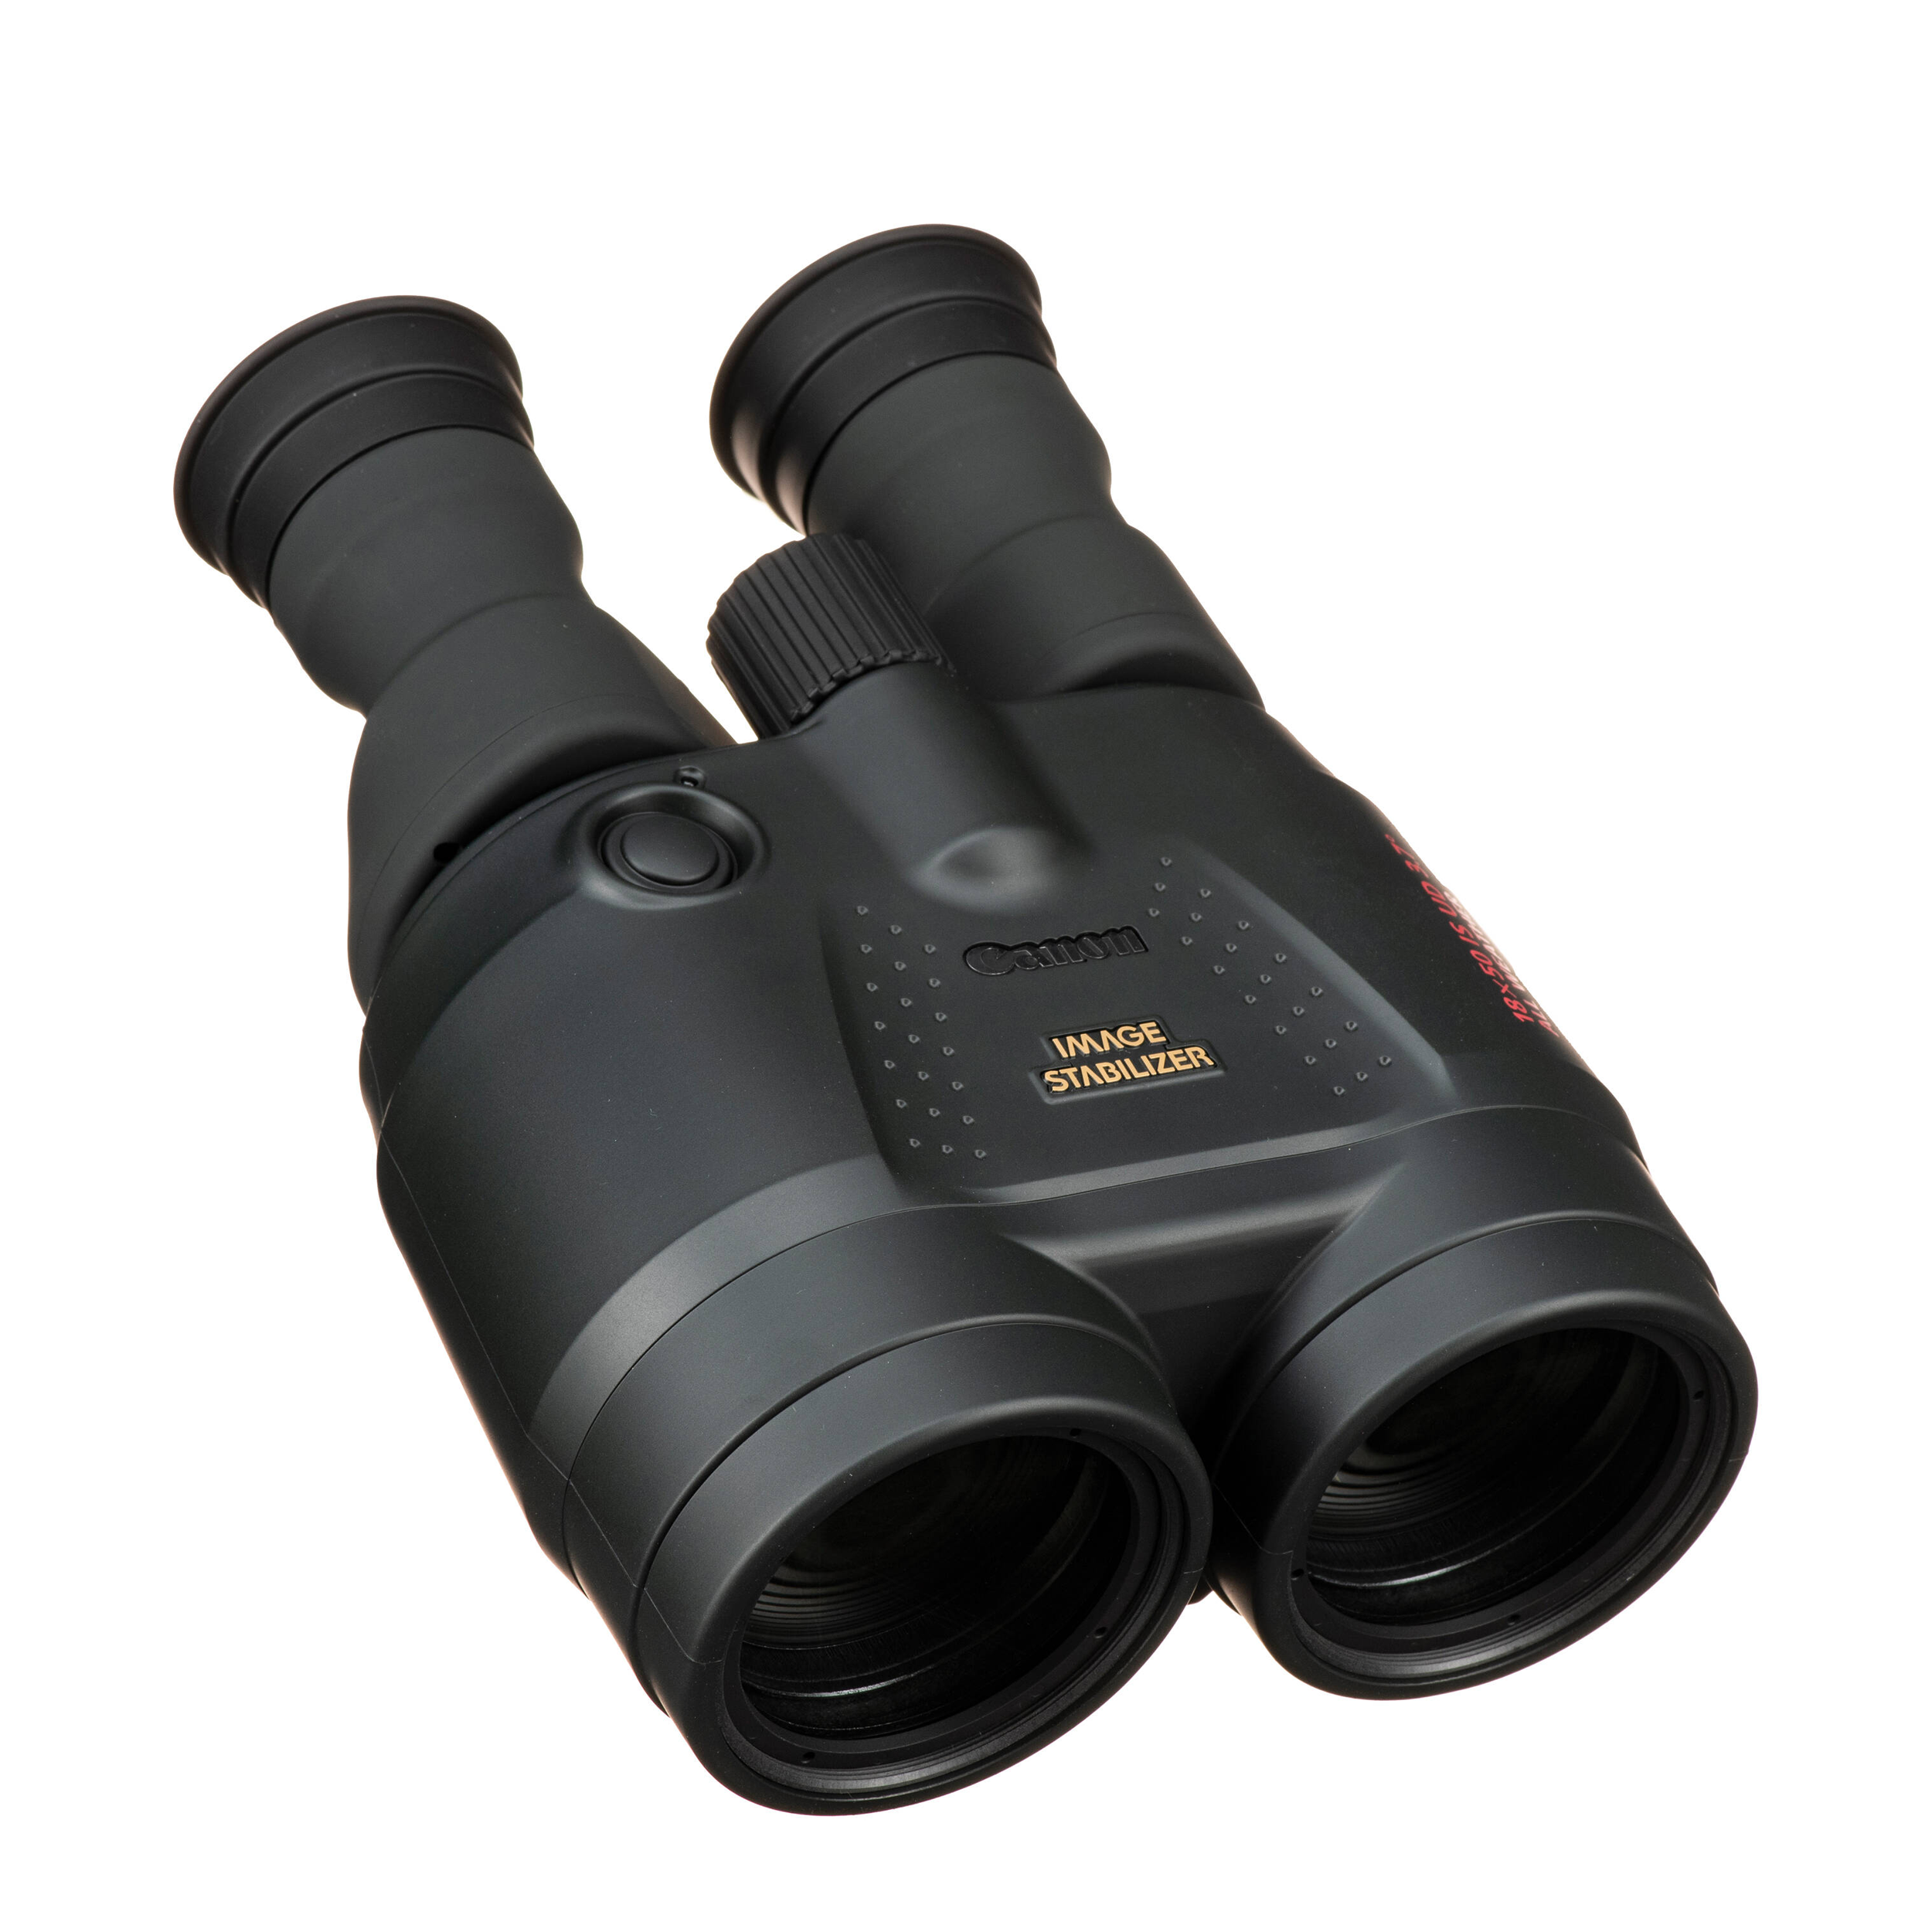 Canon 18x50 IS Image Stabilized Binoculars - OPEN BOX